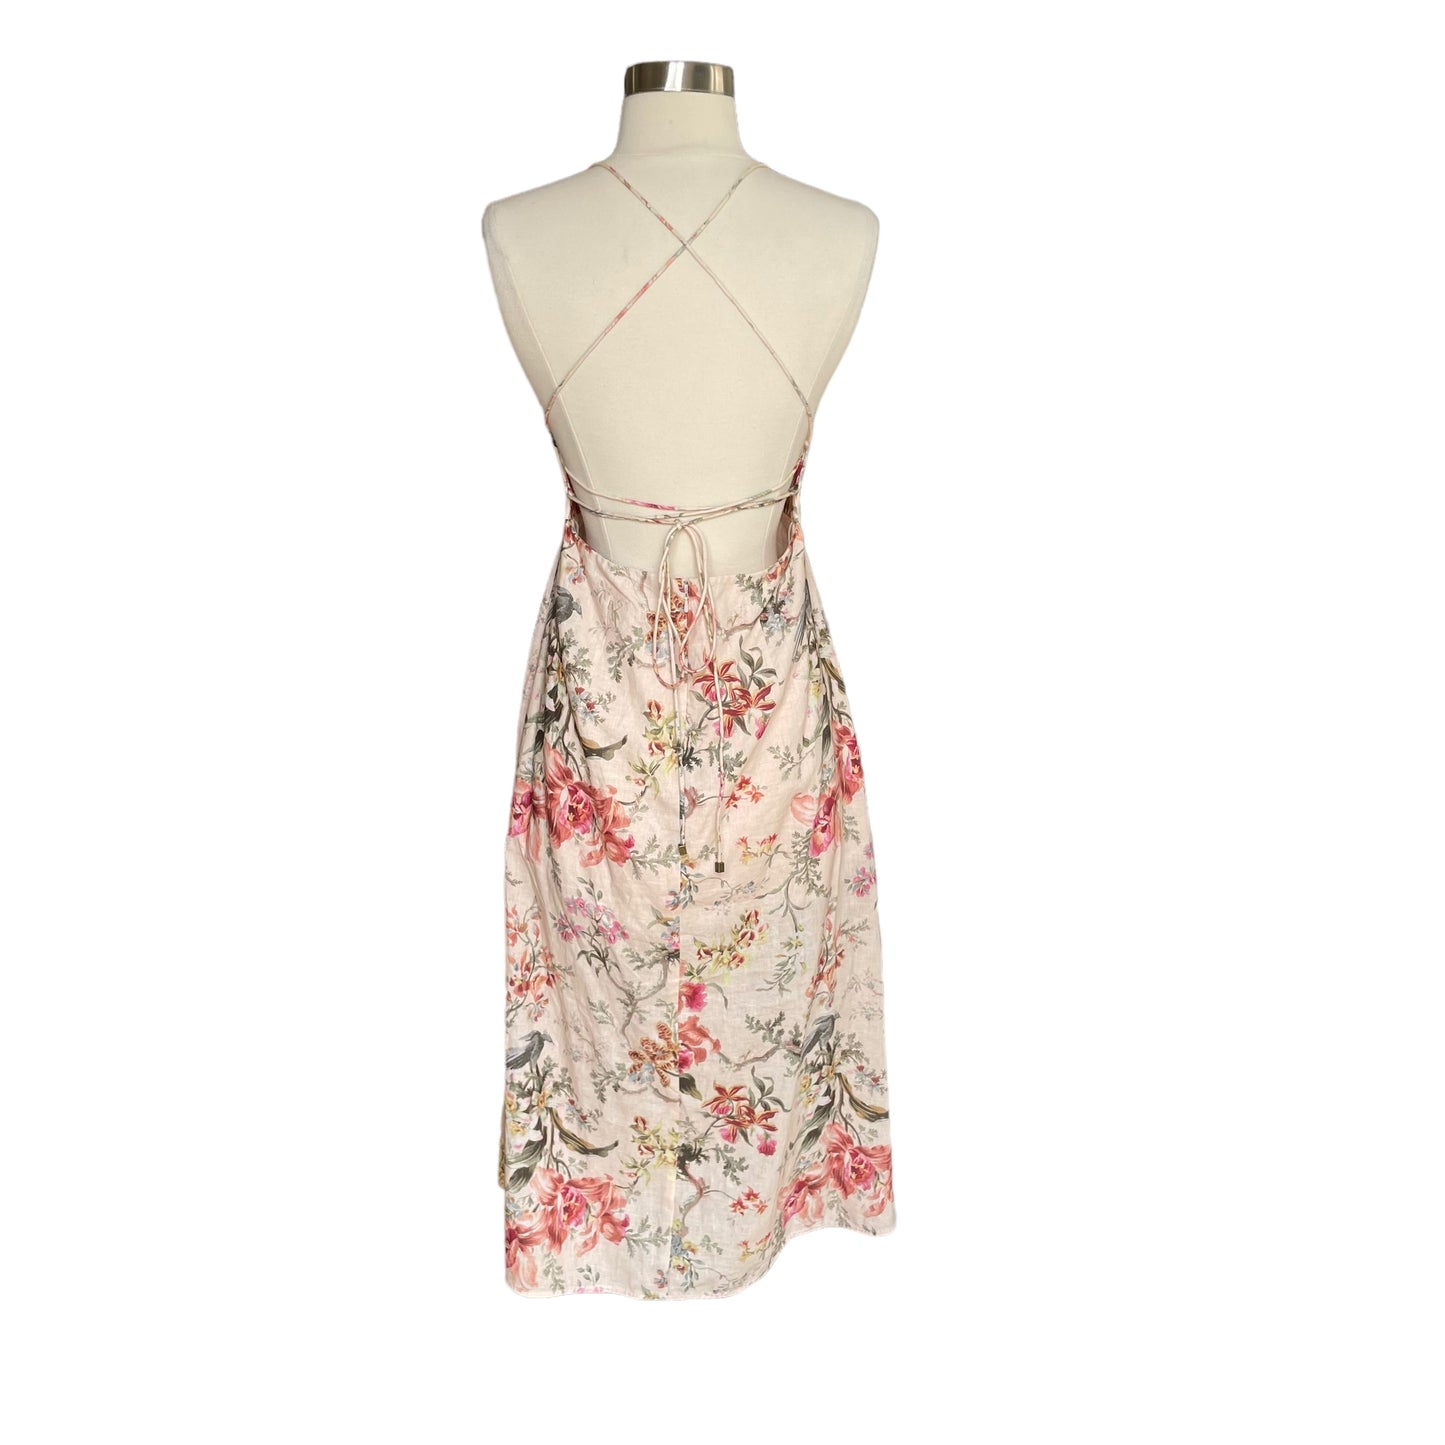 Linen Floral Maxi Dress - 1